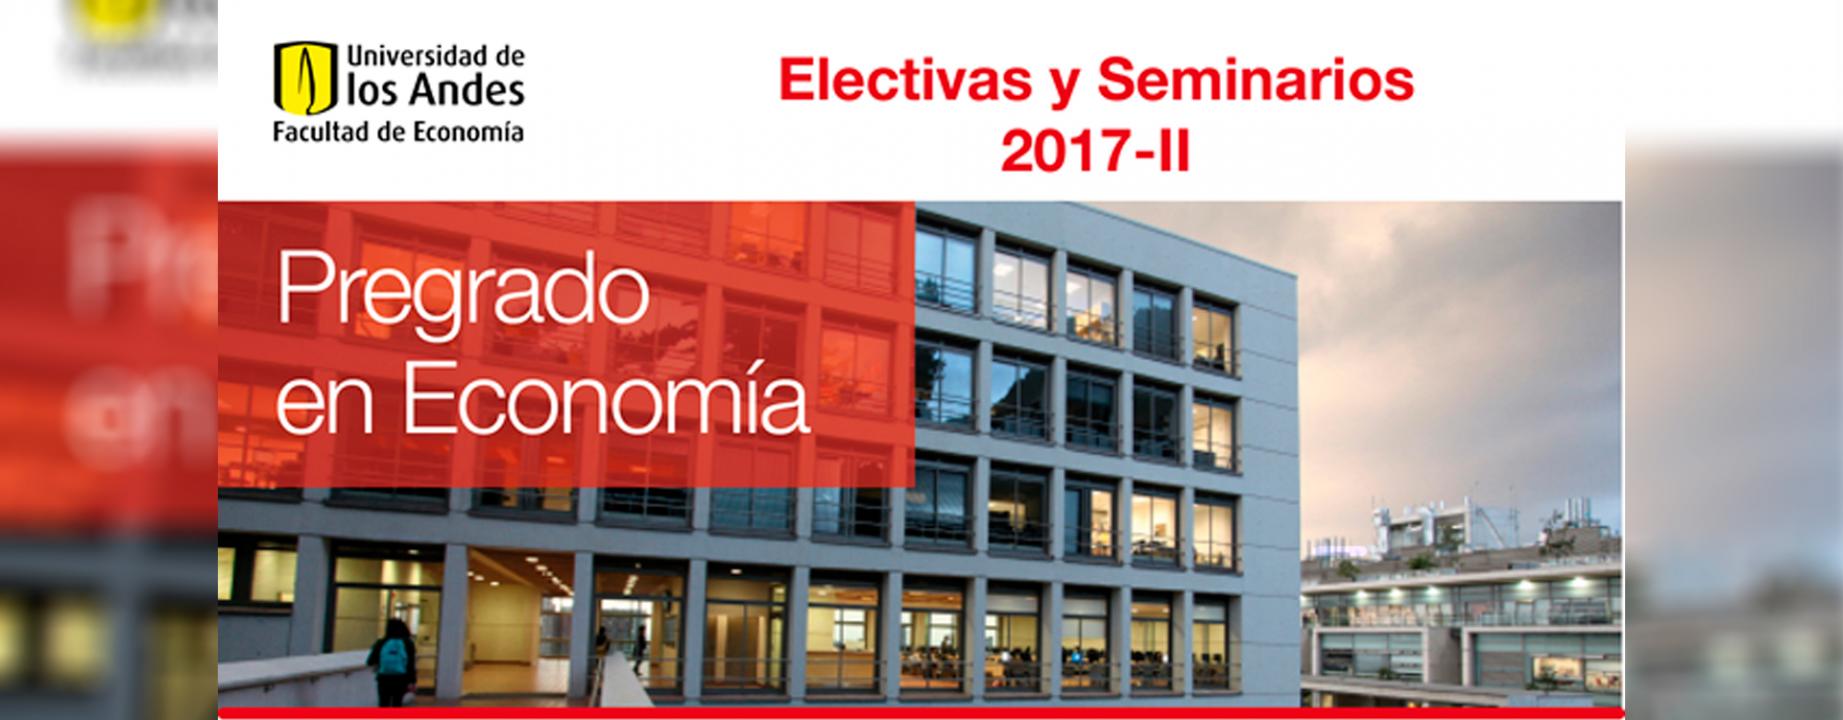 electivas-seminarios-2017-ii-banner